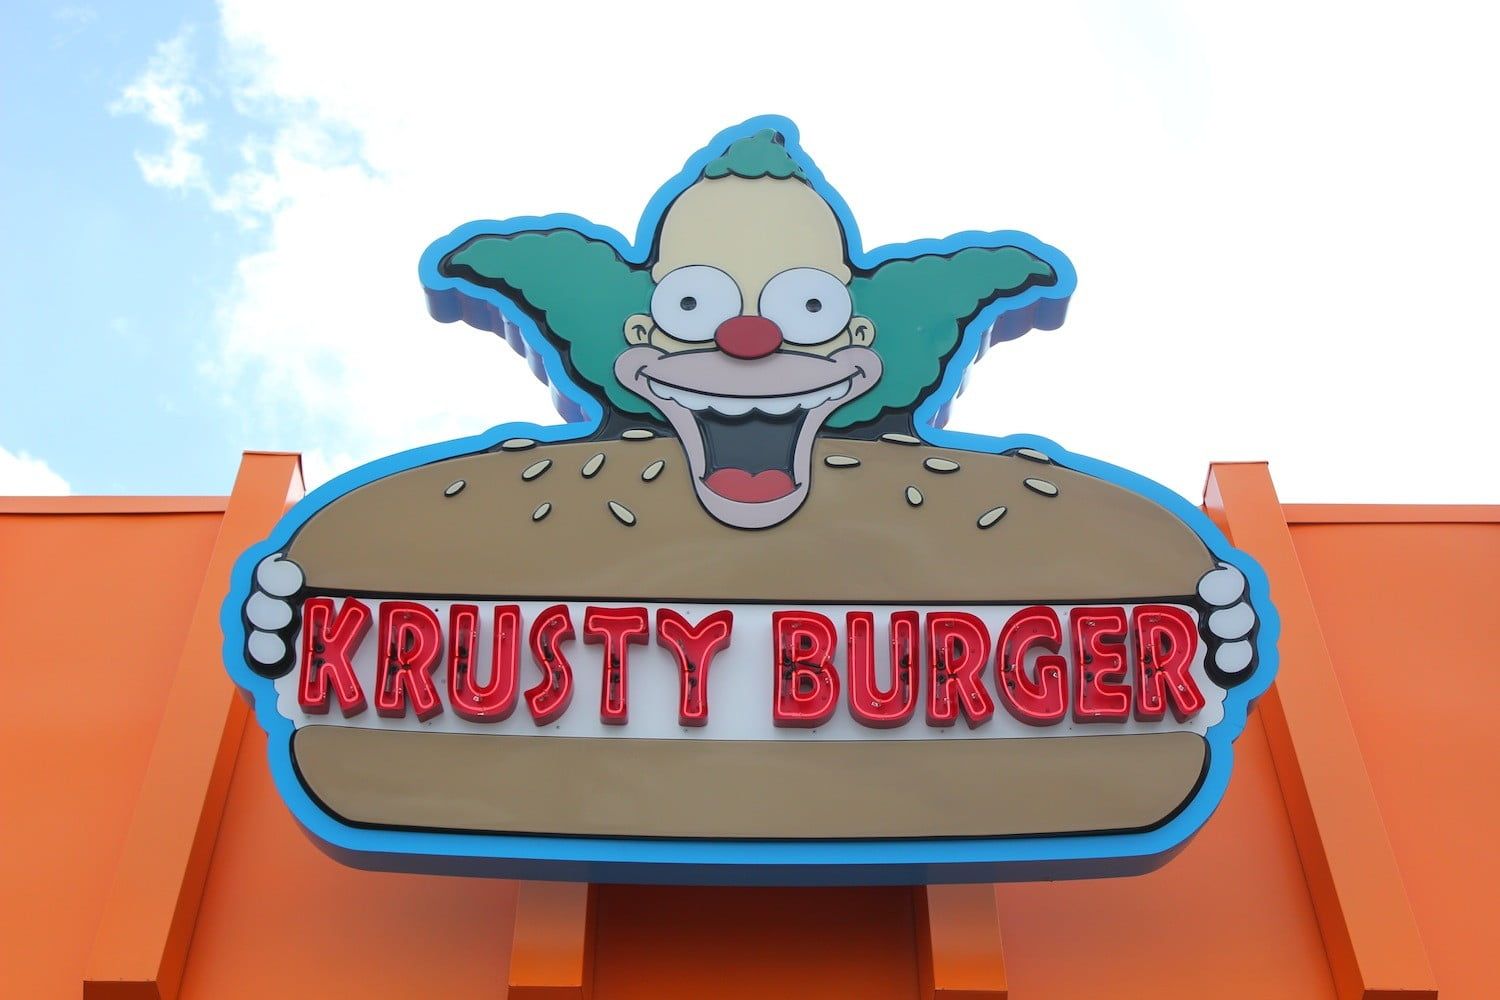 Krusty Burger logo, Krusty the Clown, burgers, sign, The Simpsons.